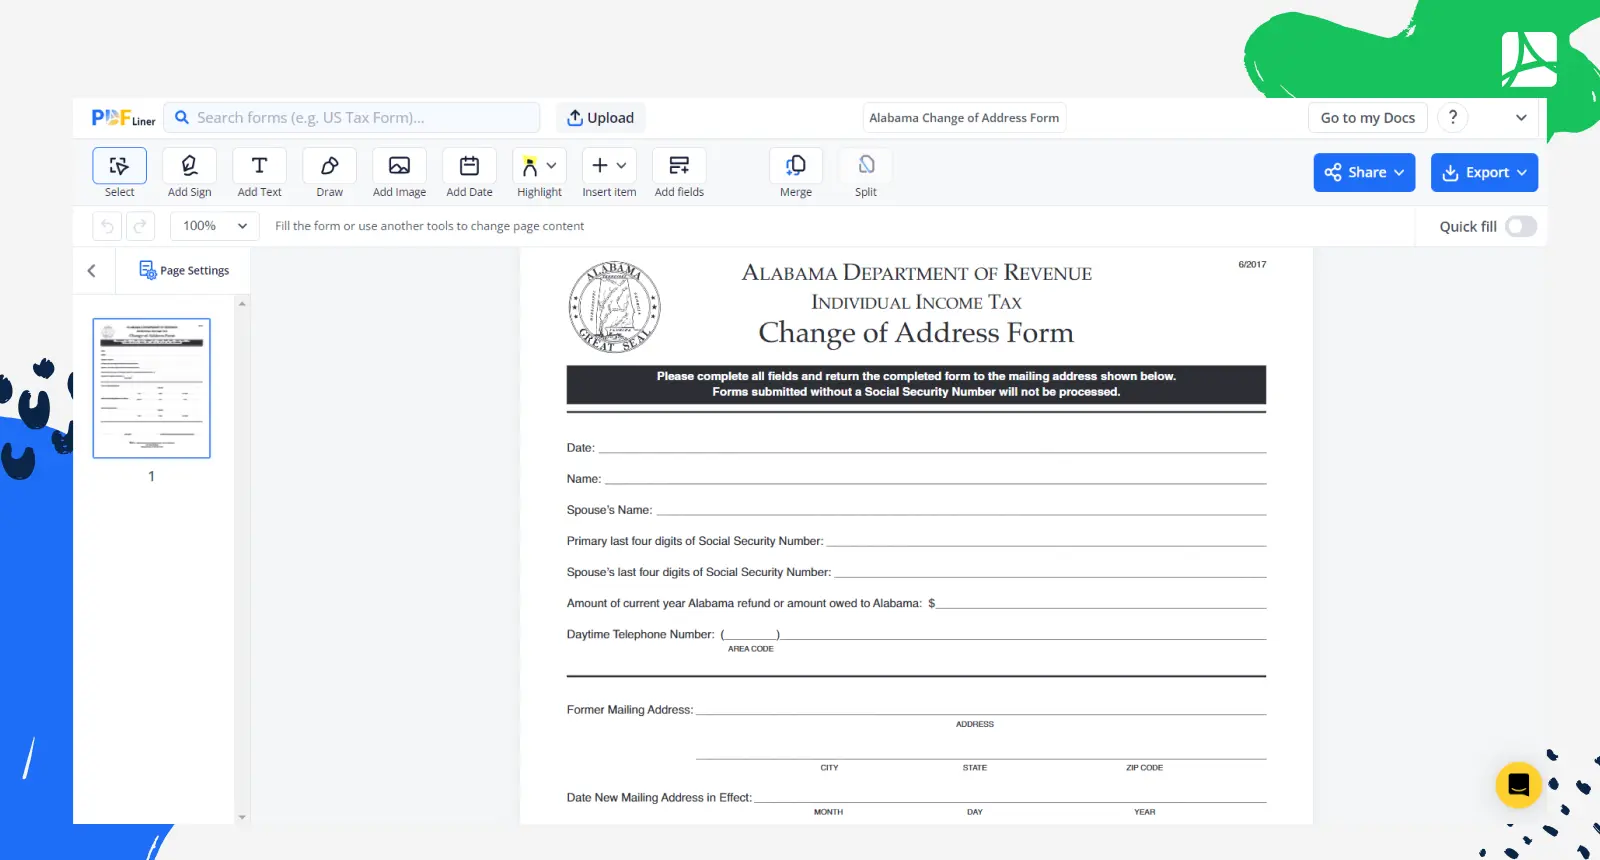 Alabama Change of Address Form Screenshot